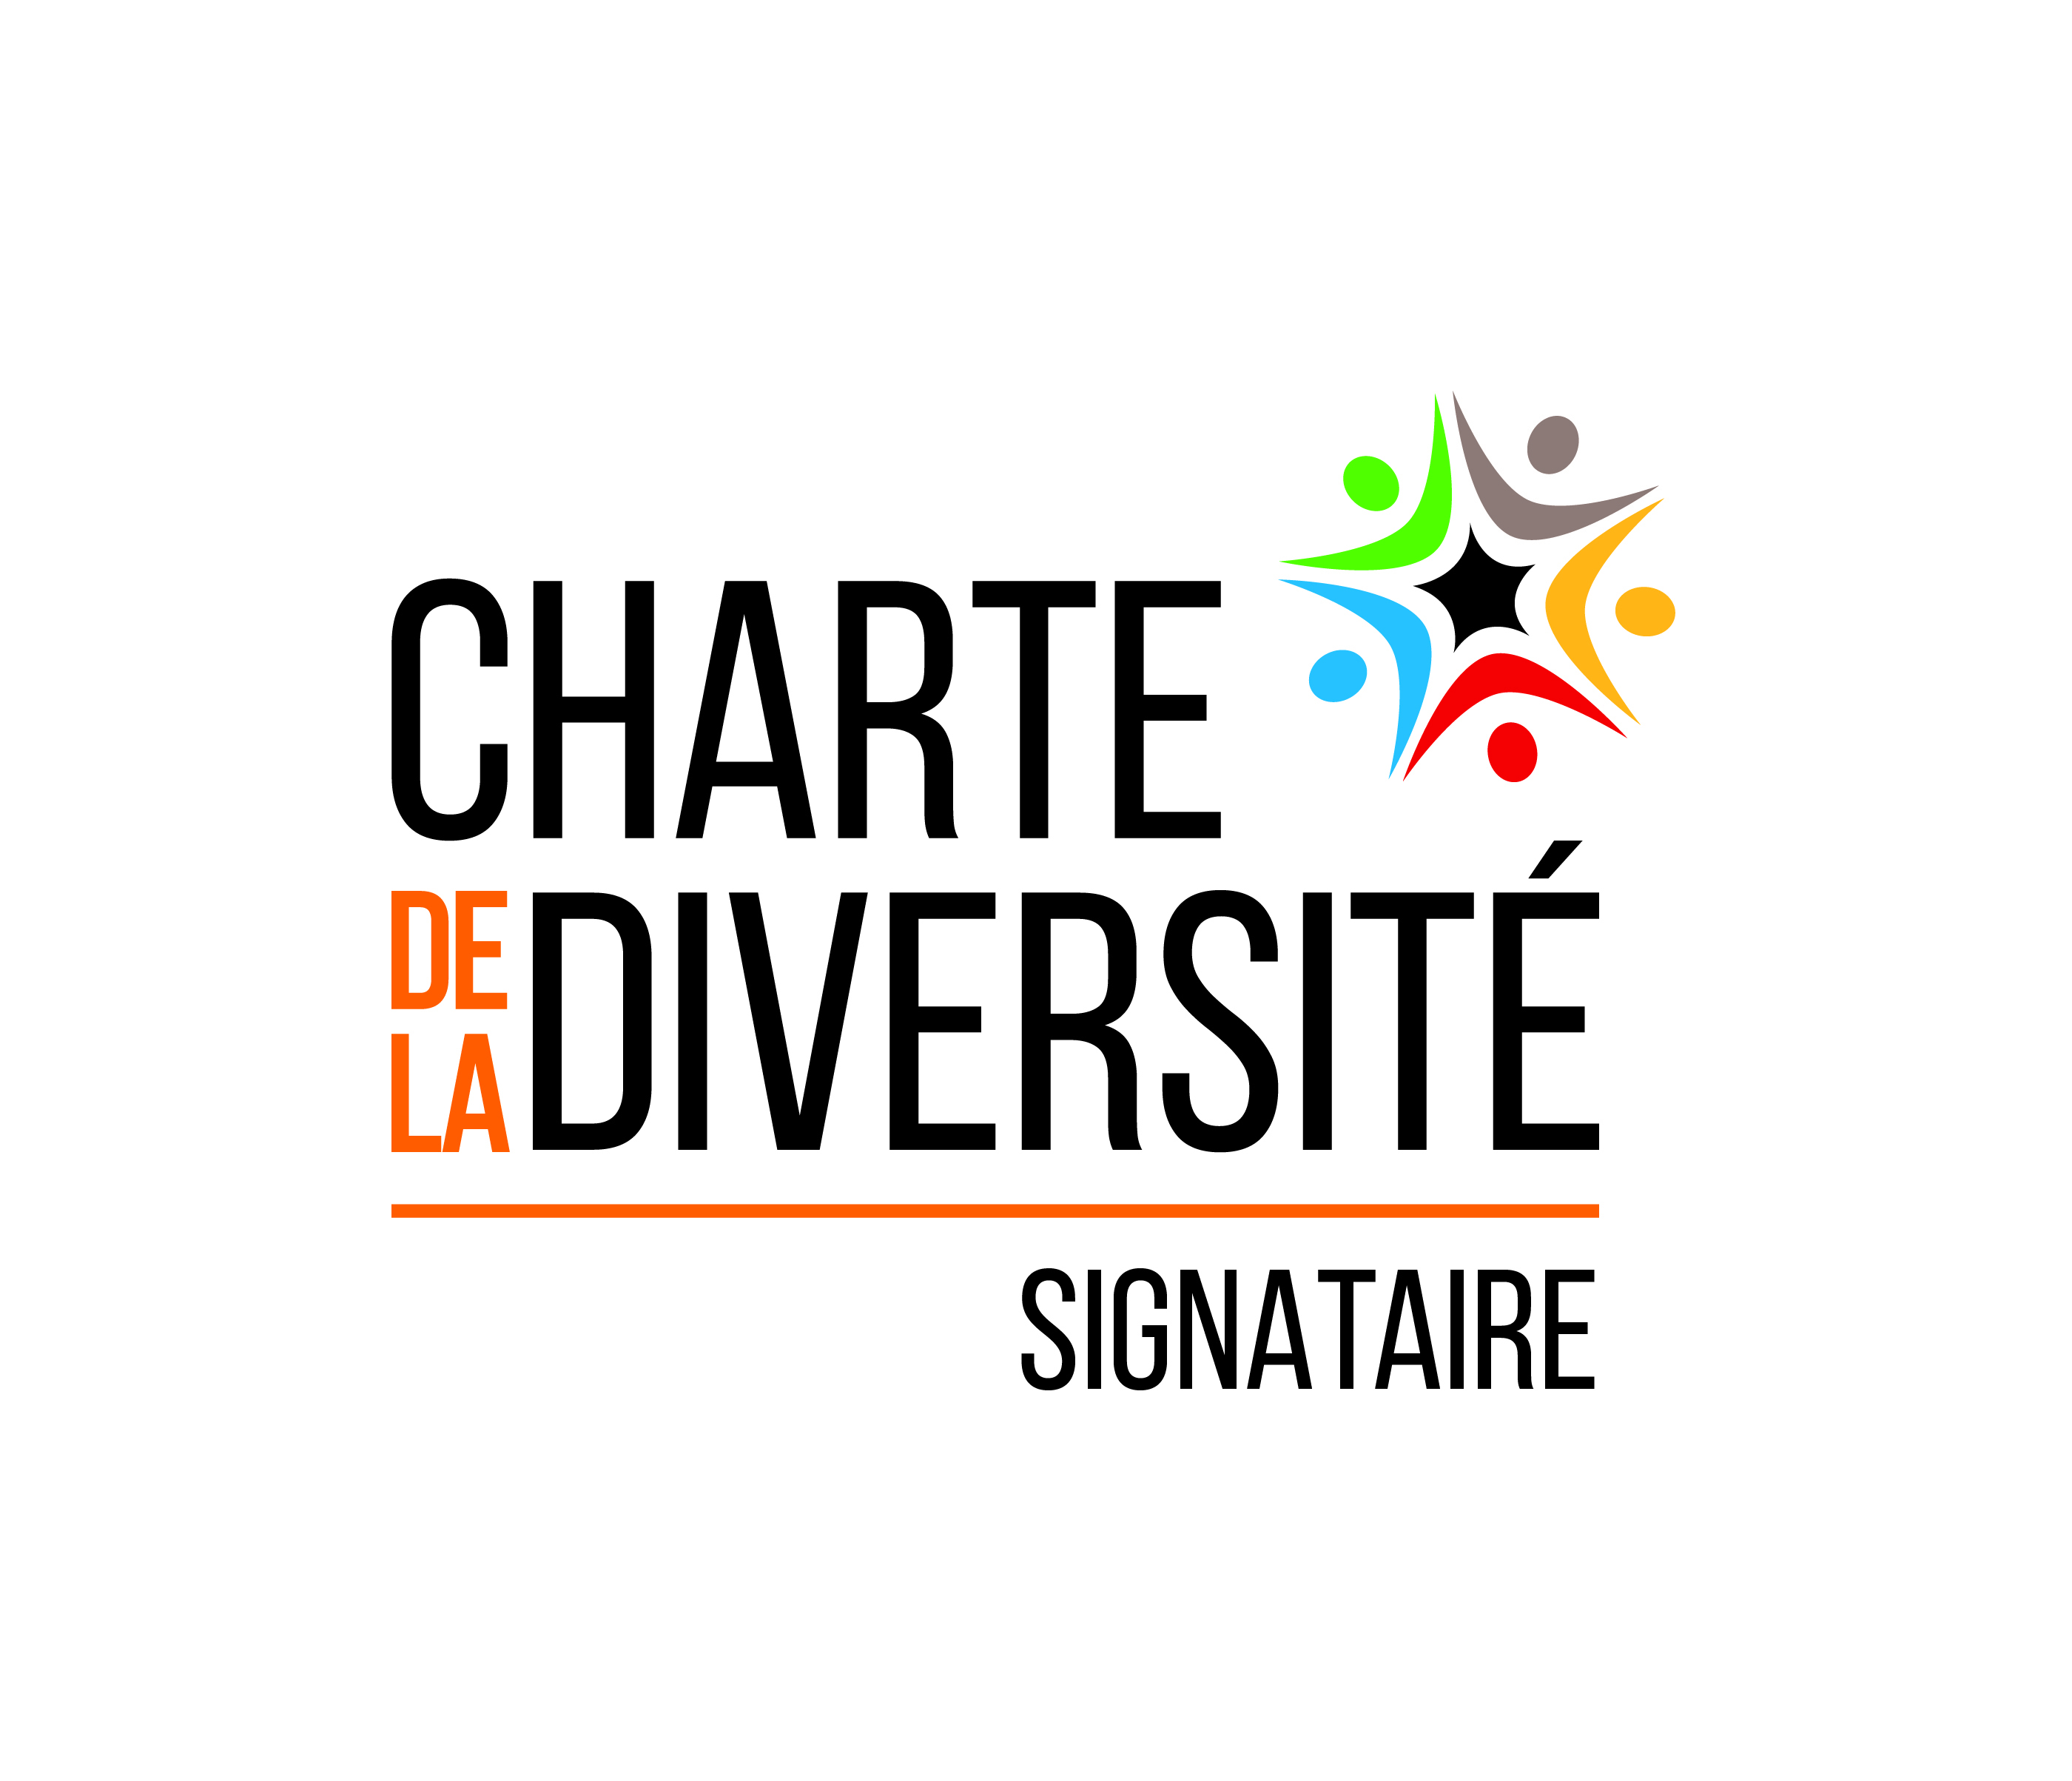 Diversity charte